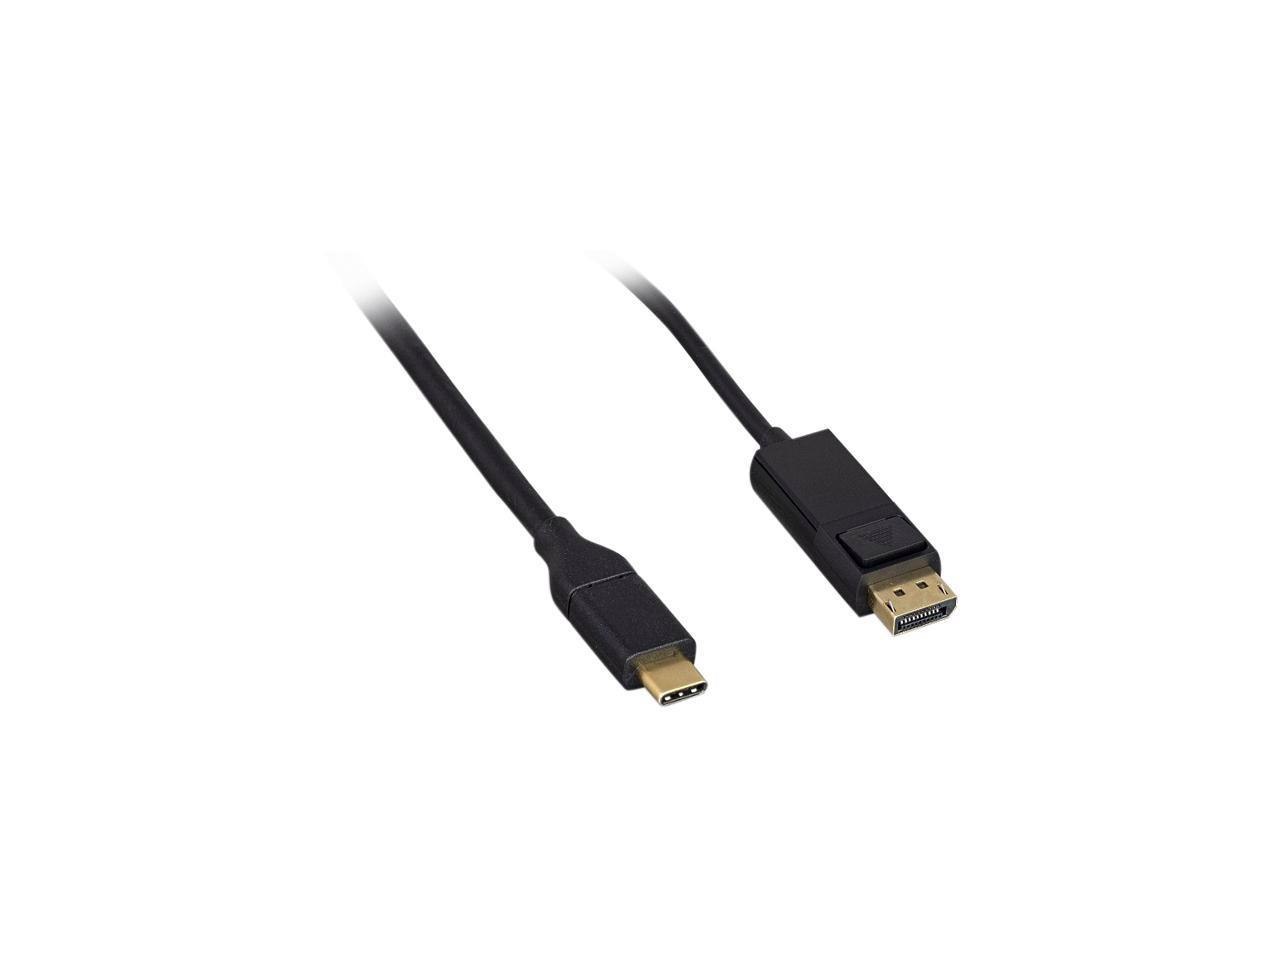 Nippon Labs Usb 3.1 3 FT. Usb-C To DisplayPort Cable 4K@60HZ